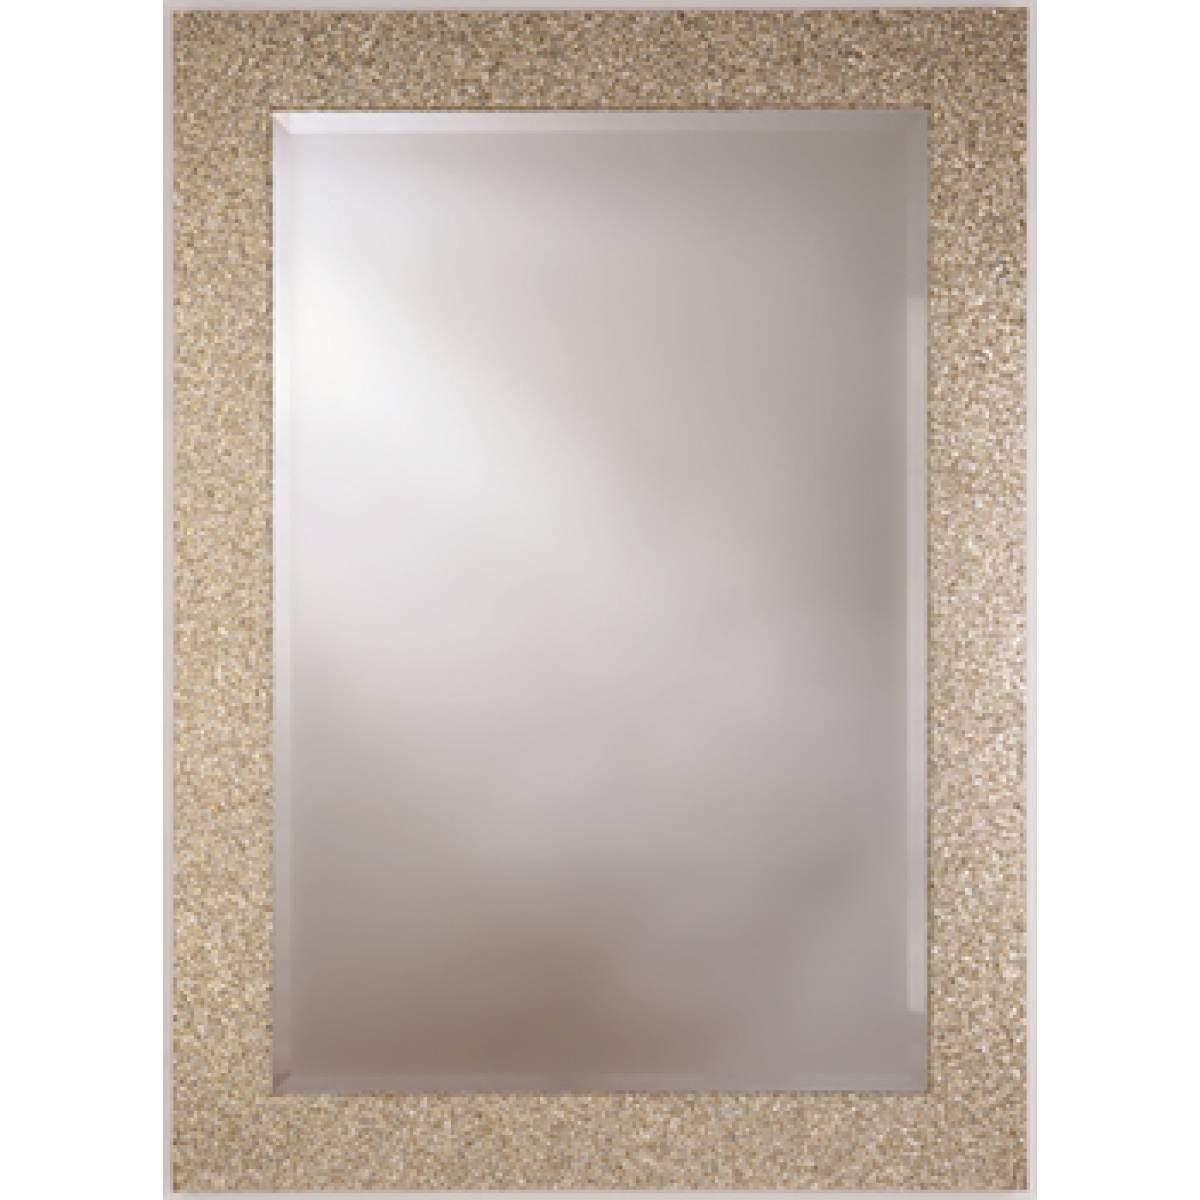 Glitter Mirror | Inovodecor Throughout Glitter Frame Mirrors (View 4 of 25)